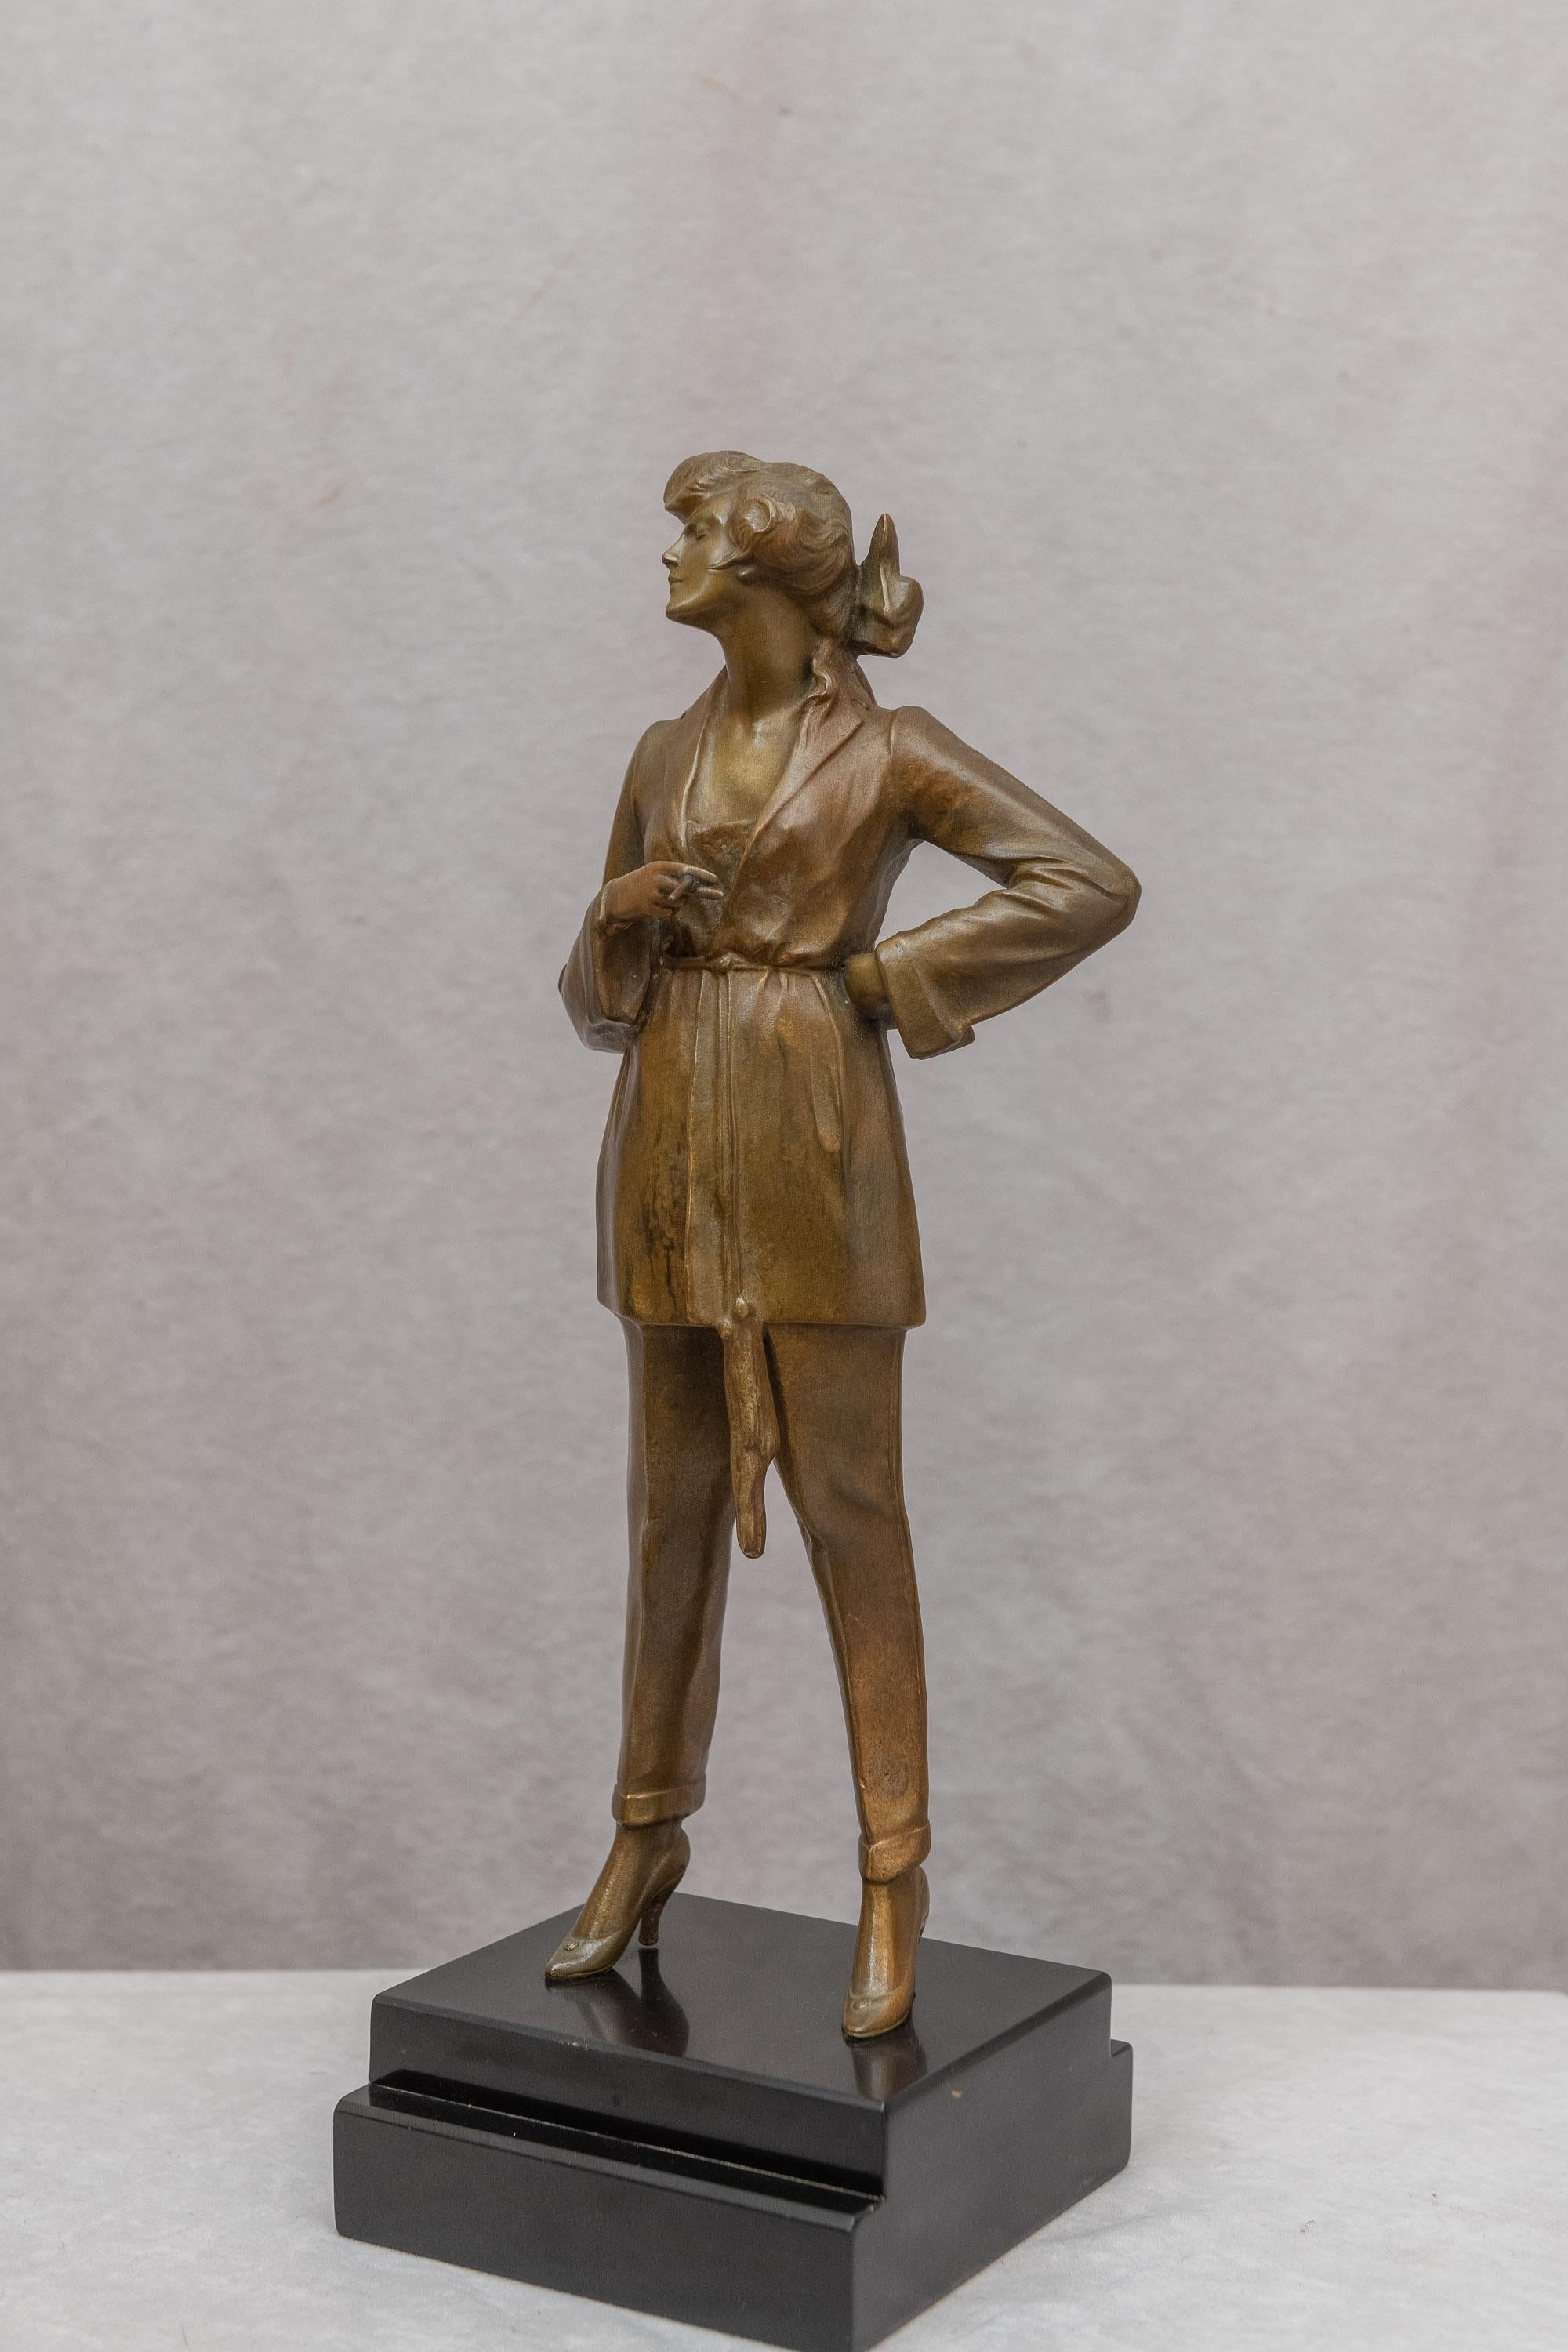 Austrian Art Deco Bronze of a Classy Woman by Bruno Zach ca. 1930s